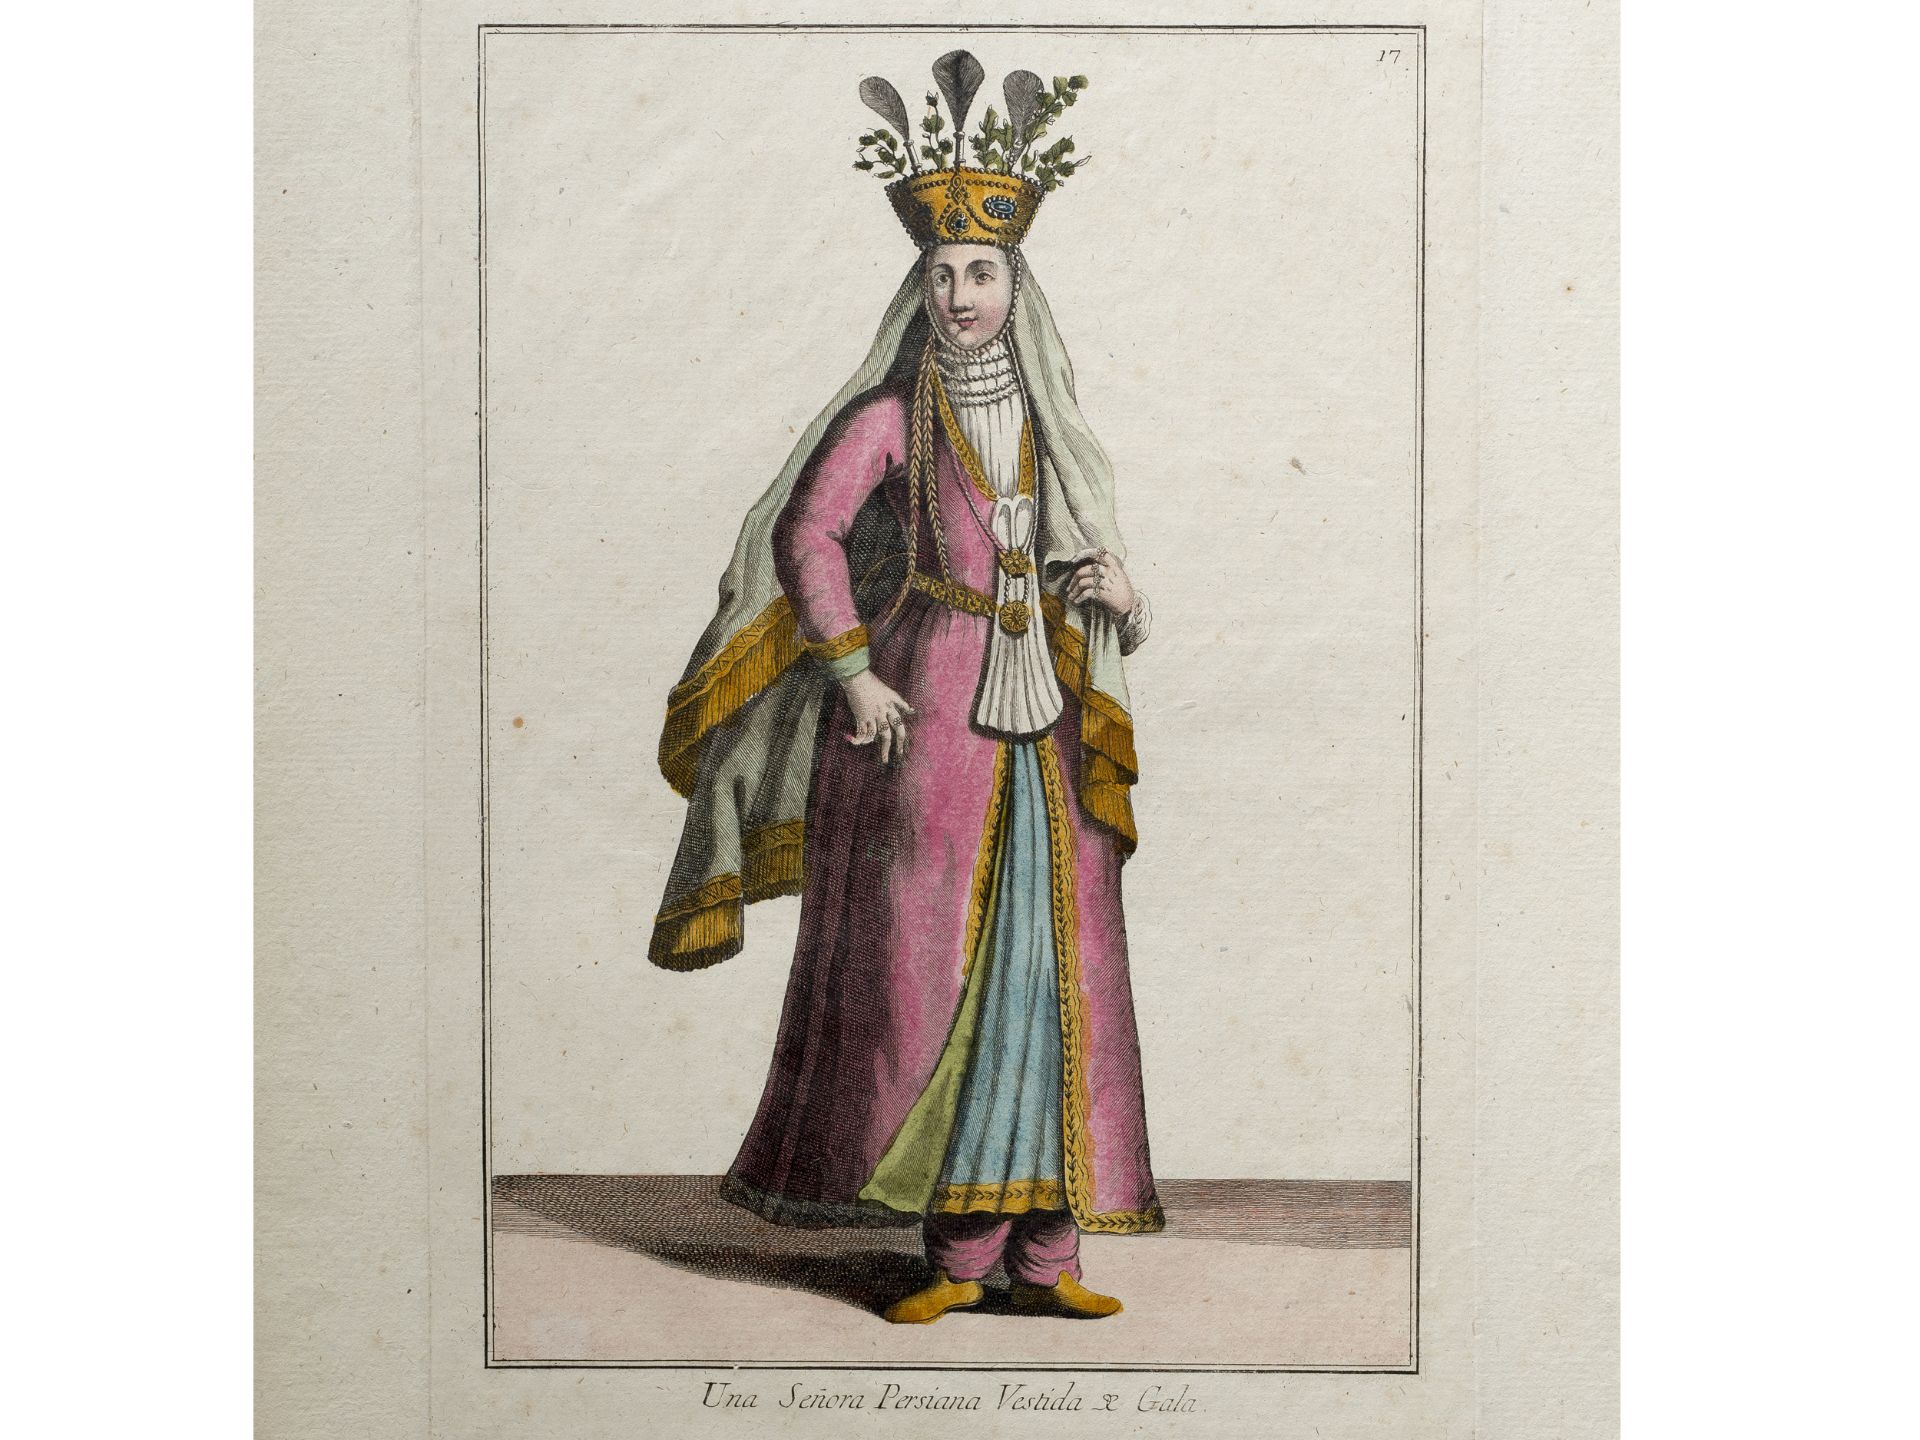 "Una Señora Persiana Vestida de Gala", From a book of historical costume studies?, Spain